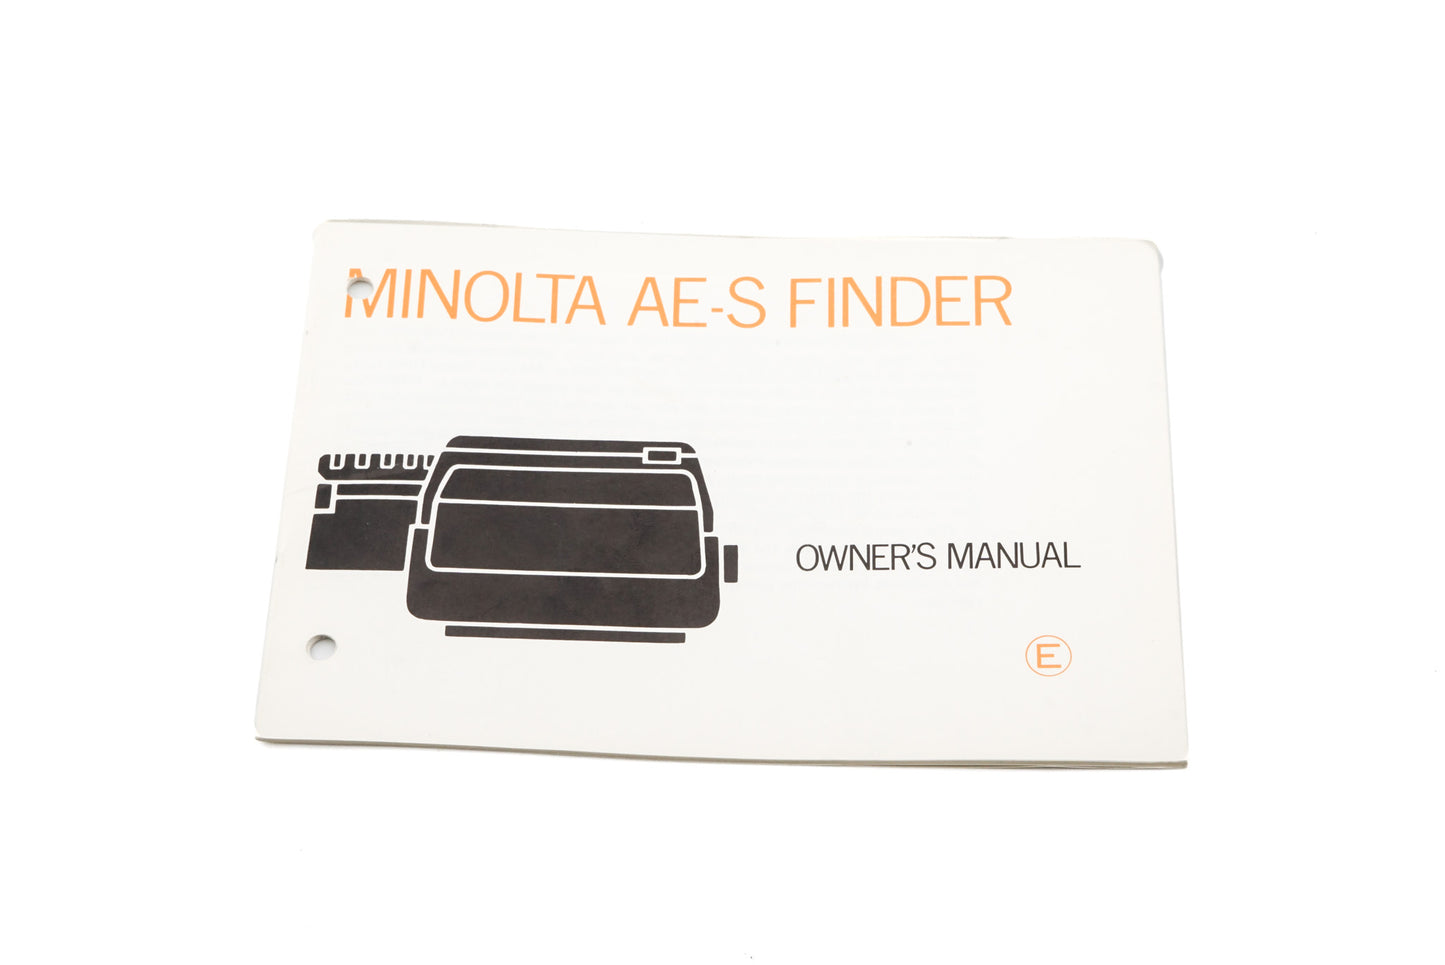 Minolta XM Finder (AE-S) Instructions